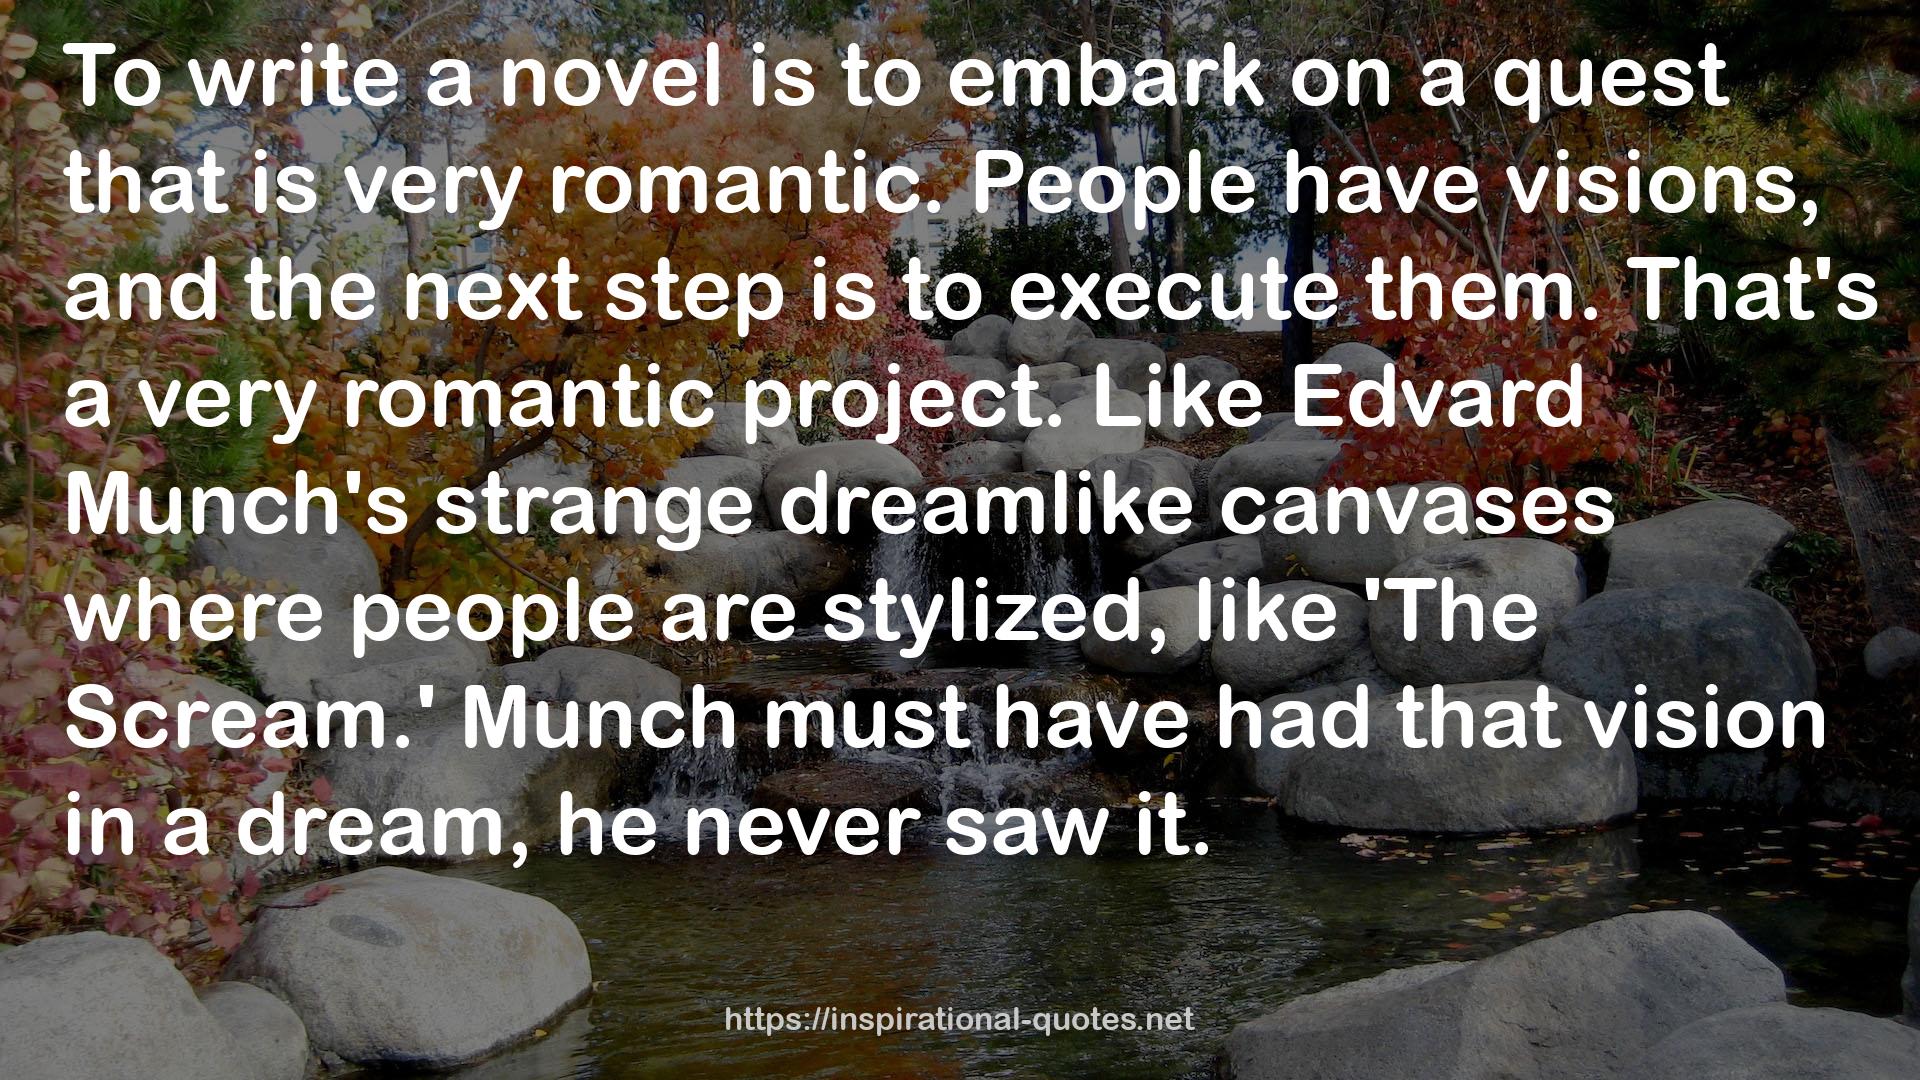 Edvard Munch's strange dreamlike canvases  QUOTES